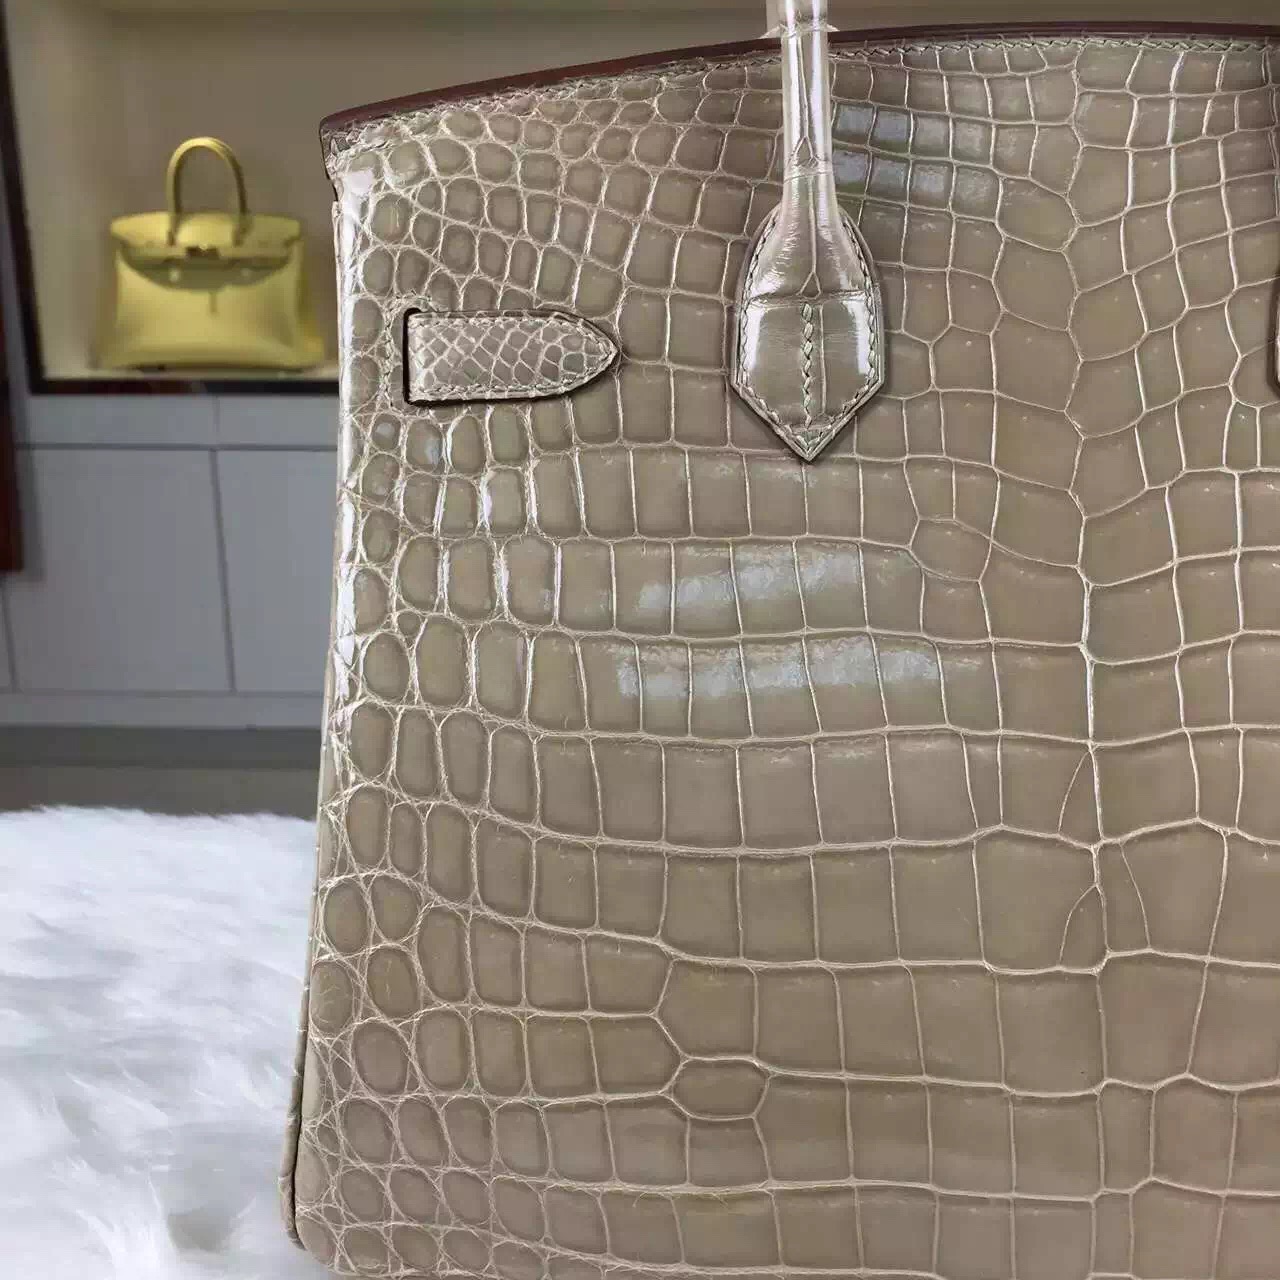 Hermes Custom-made Original Crocodile Shiny Leather Birkin Bag30cm in Apricot